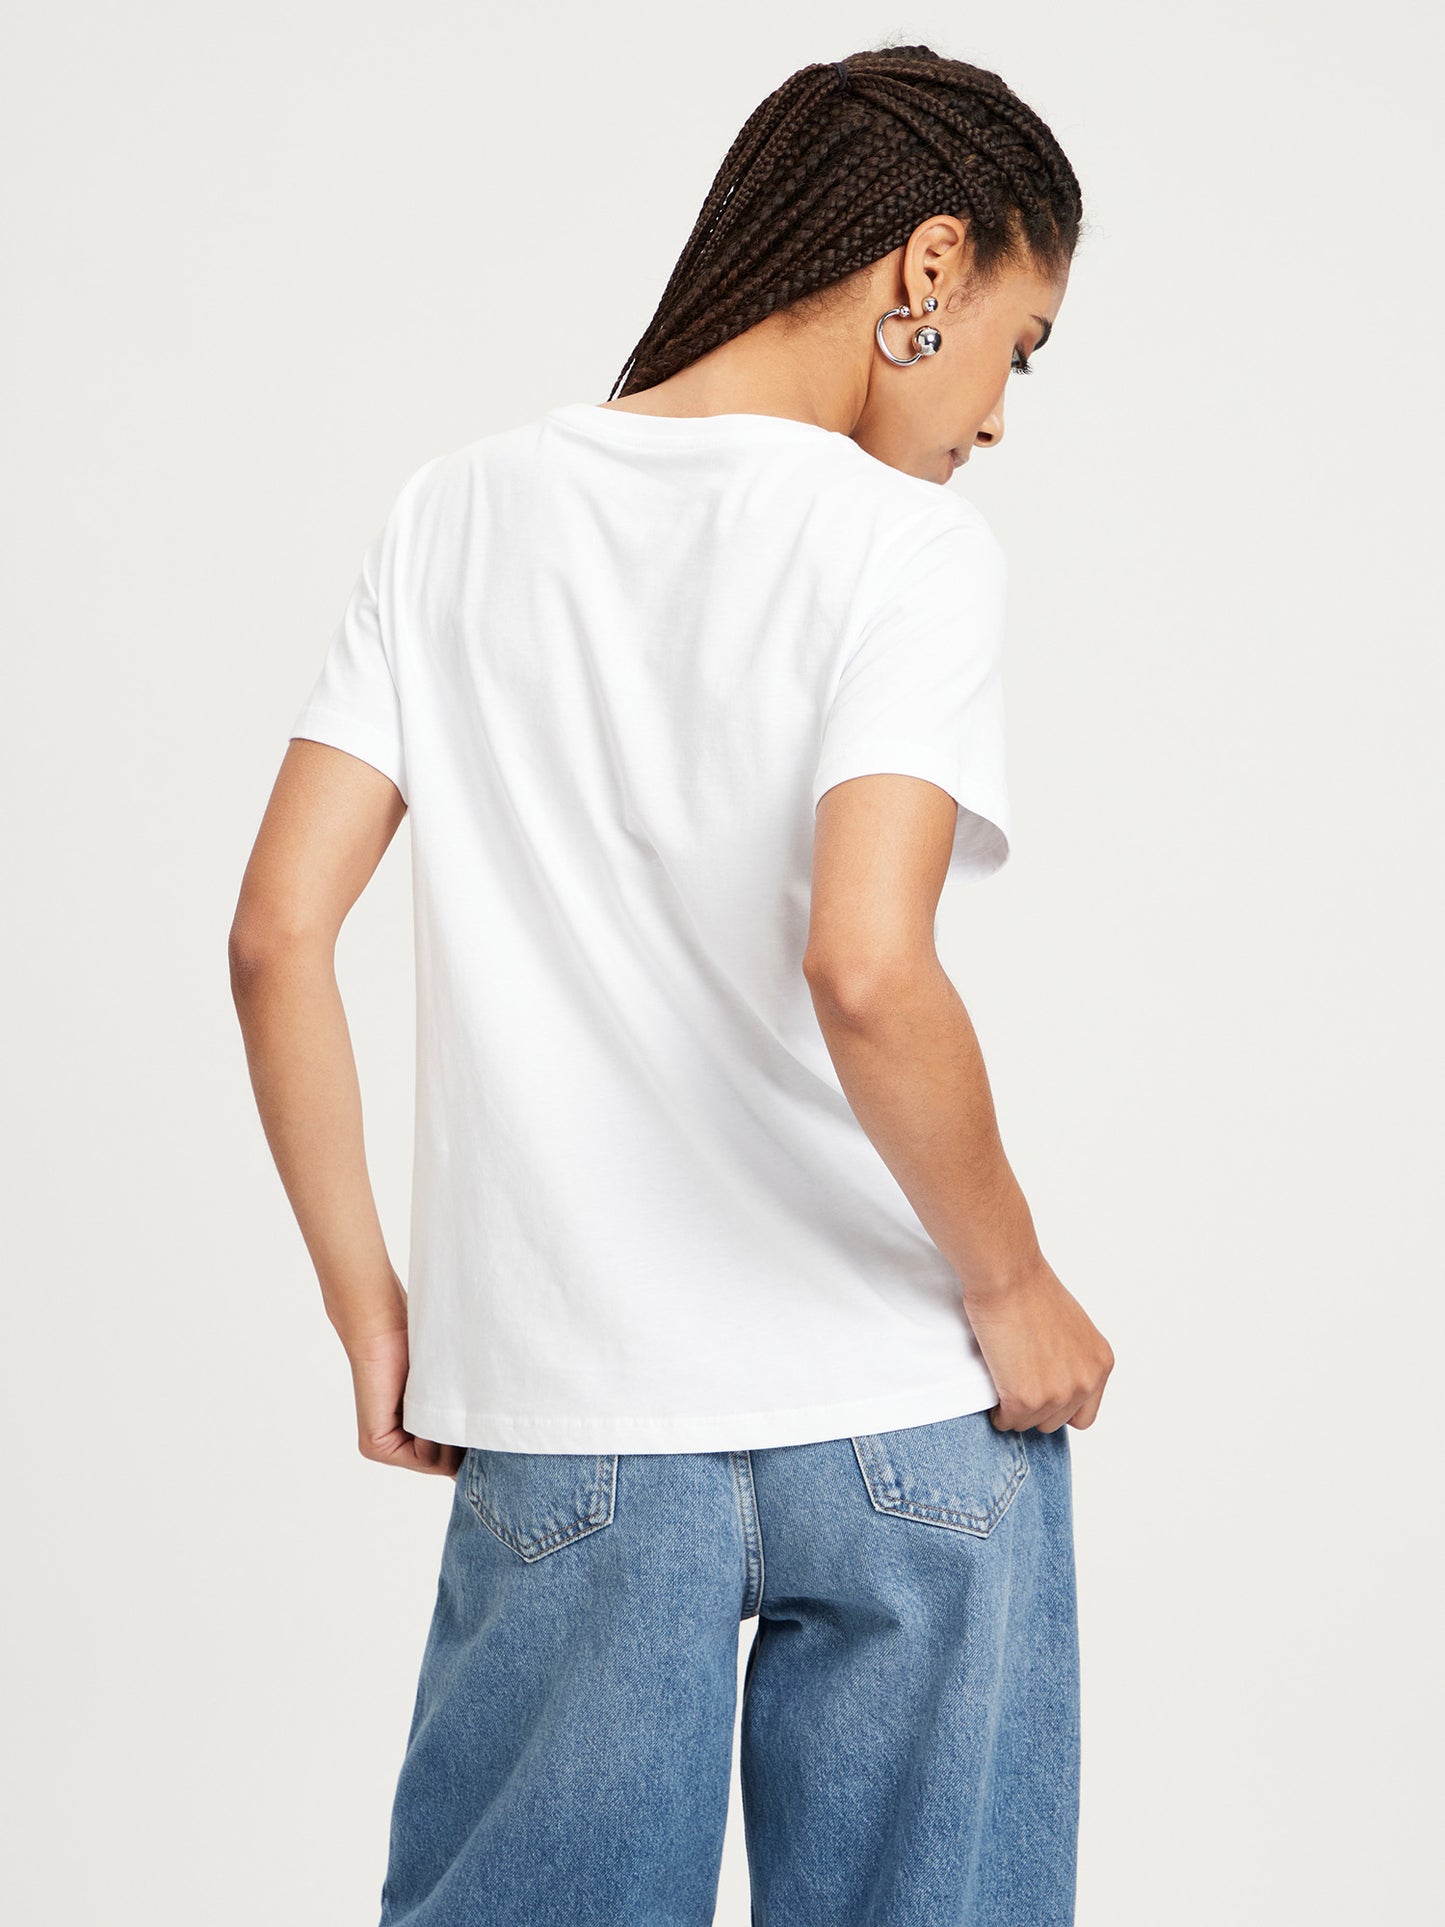 Damen Regular T-Shirt mit Glitzer-Print weiß.